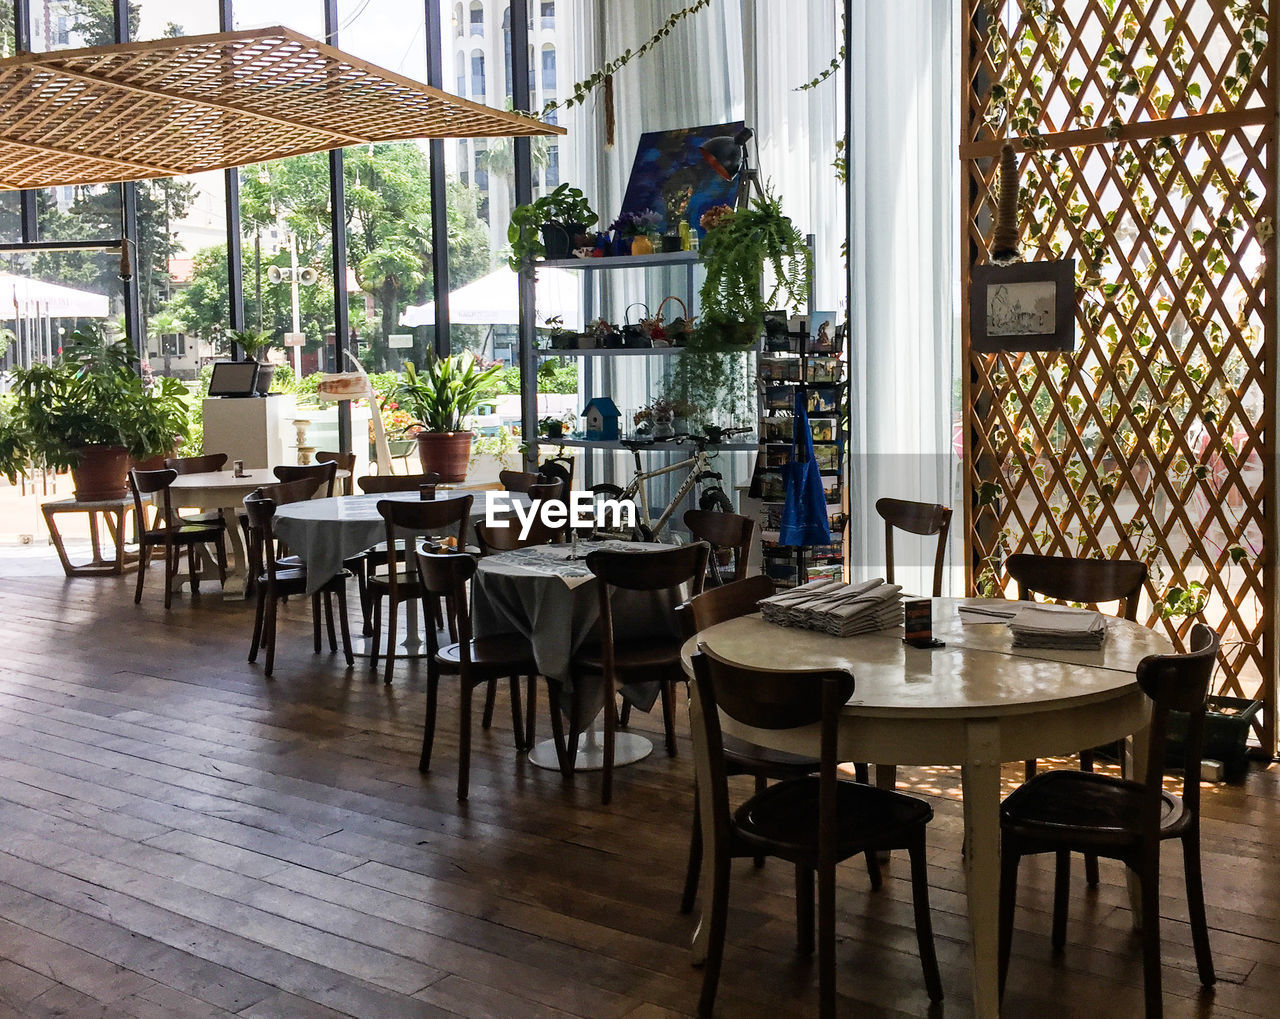 Batumi cafe gardens interior design